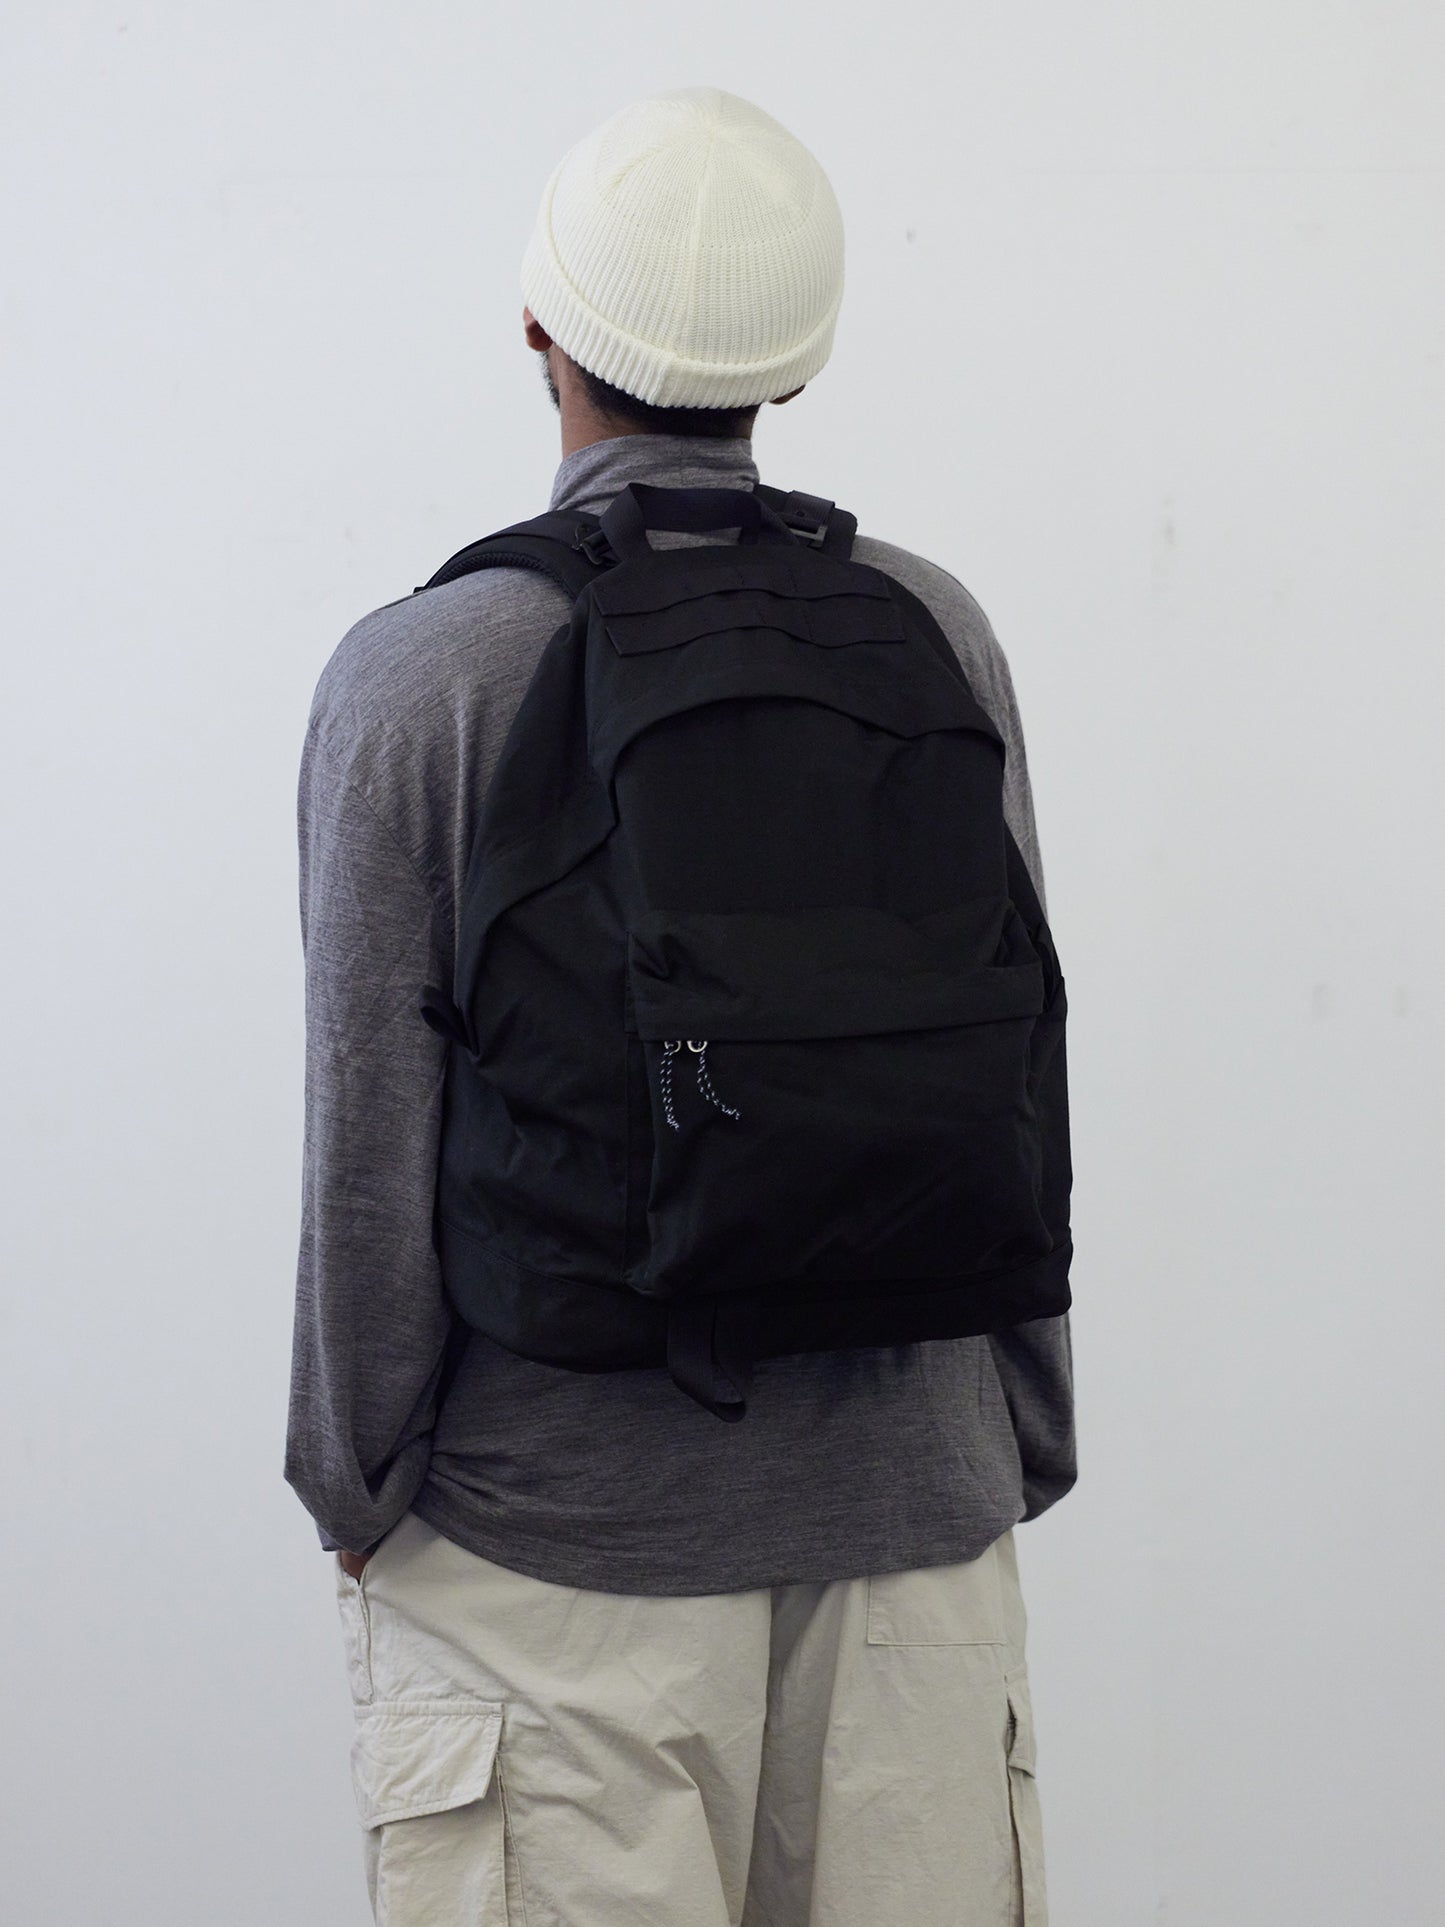 Daytrip Backpack